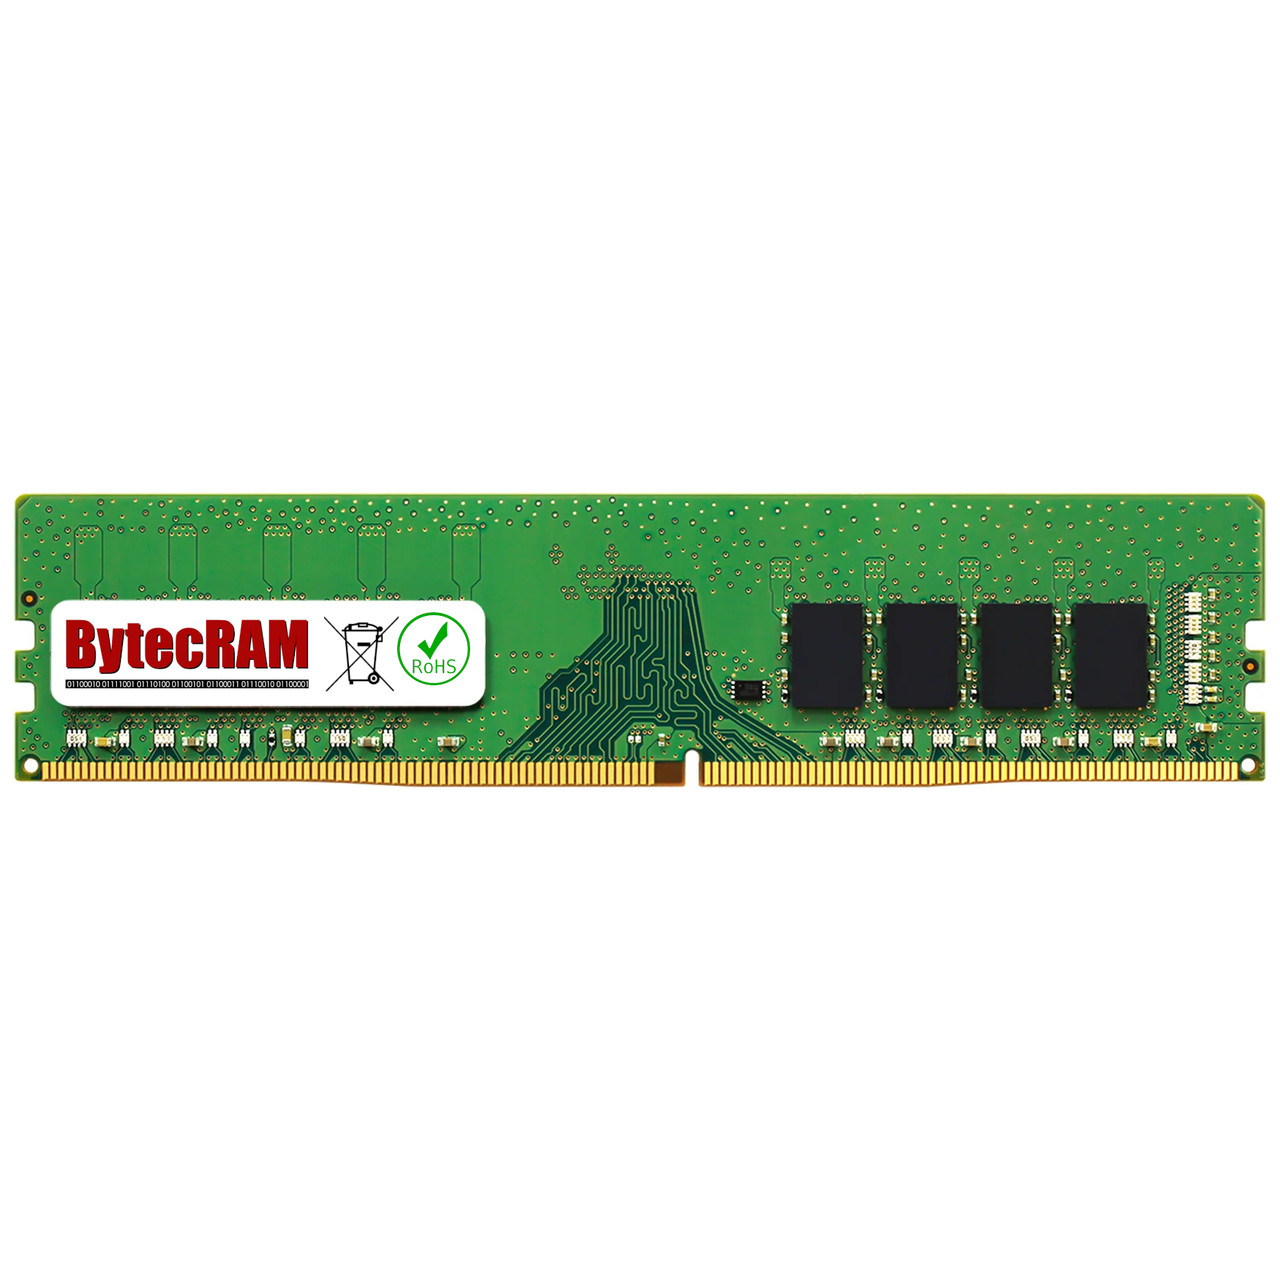 eBay*8GB Dell Alienware Aurora R5 DDR4 2133MHz UDIMM Memory RAM Upgrade